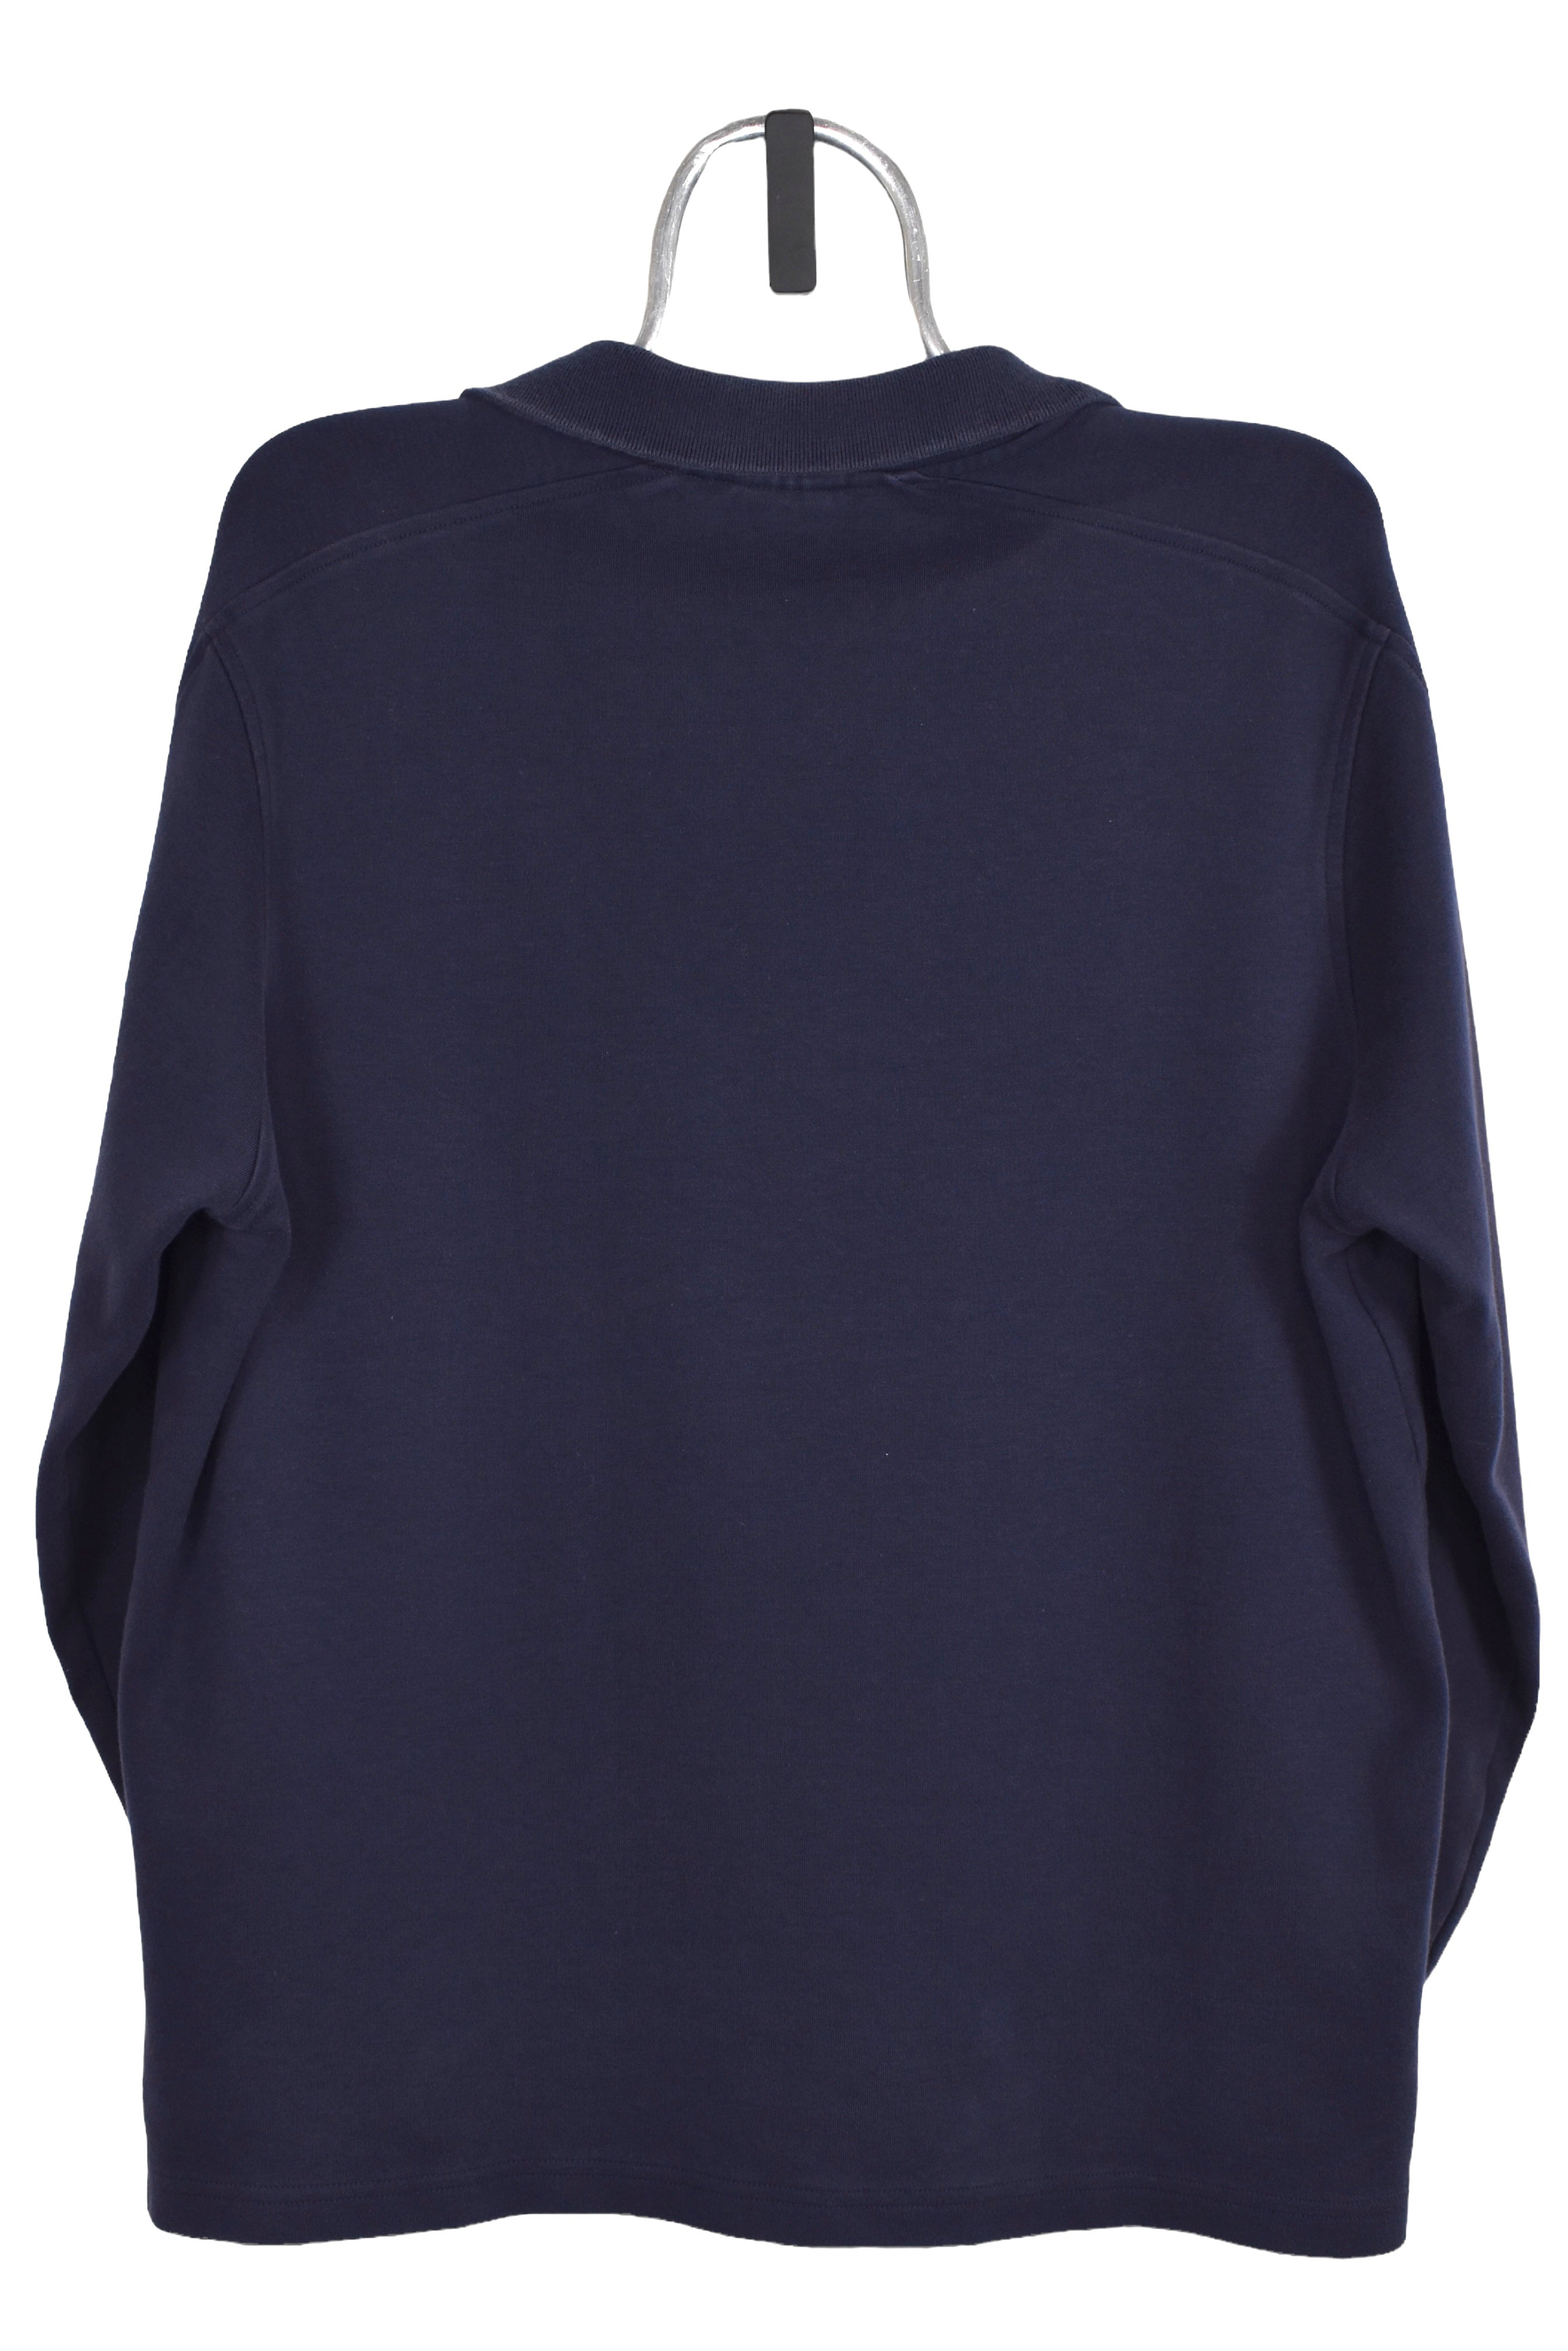 Vintage Lacoste 1/4 zip (L), navy embroidered sweatshirt